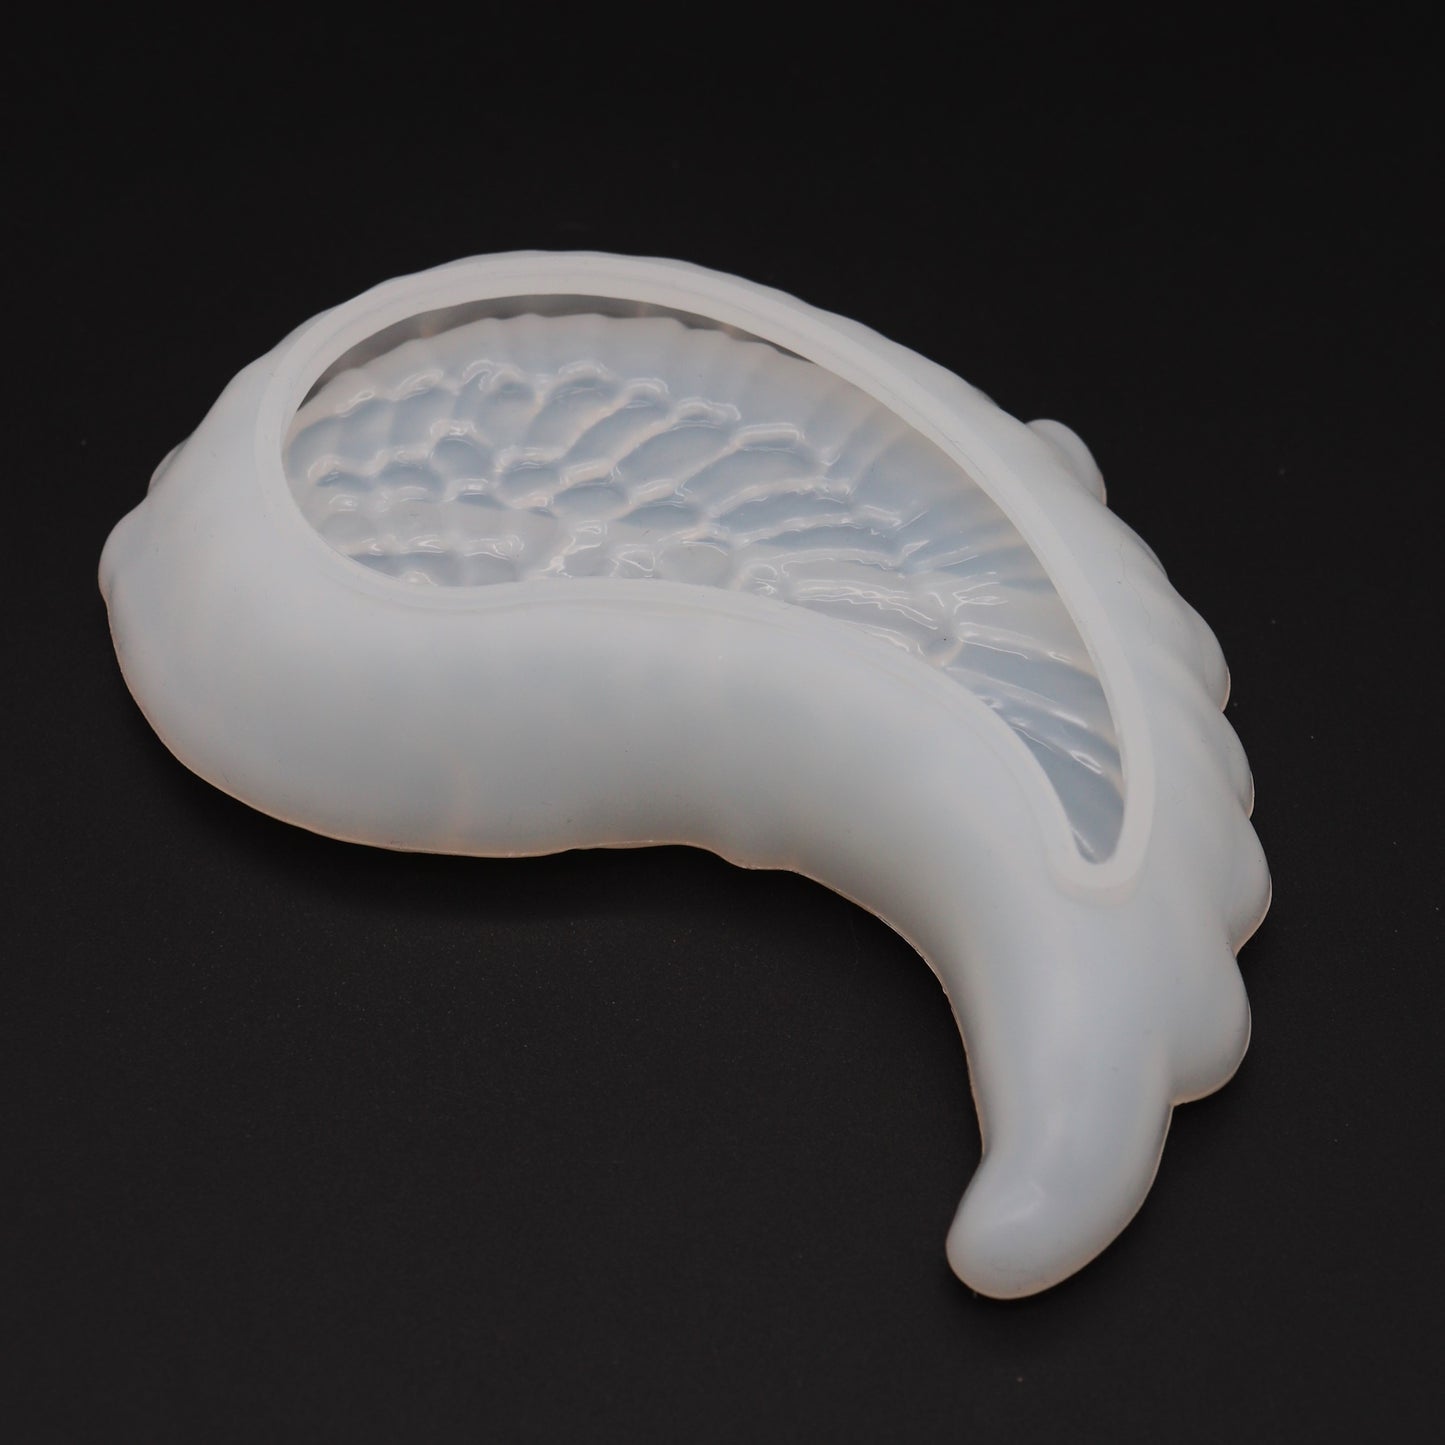 Silikonform Flügel Schale Gießform für Raysin oder Epoxidharz ca. 12,5 cm